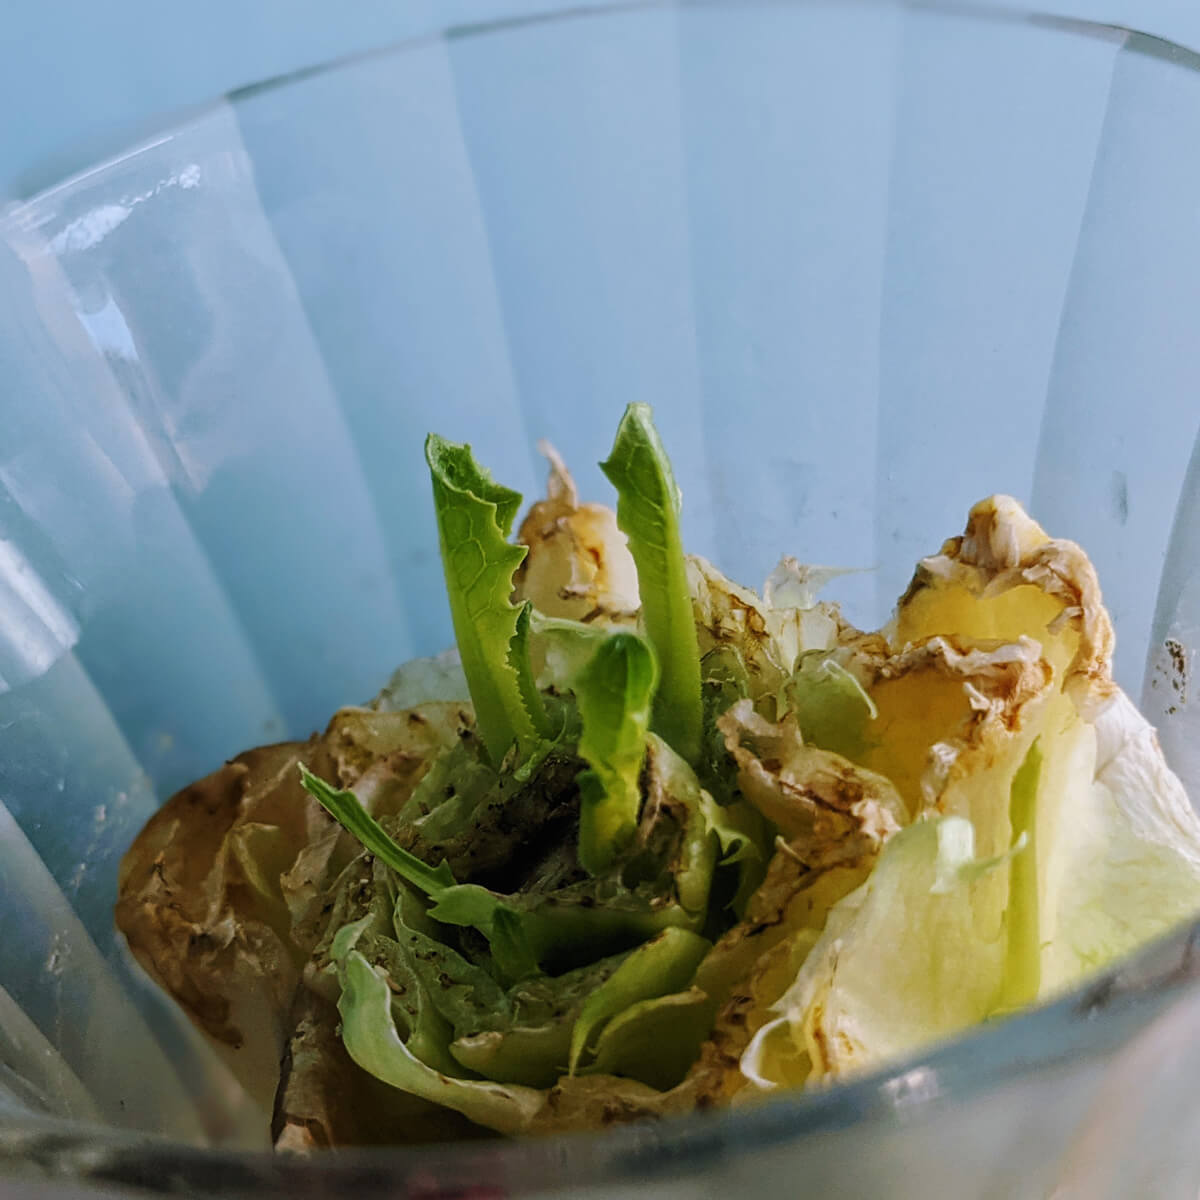 Regrowing Romaine Lettuce in Water